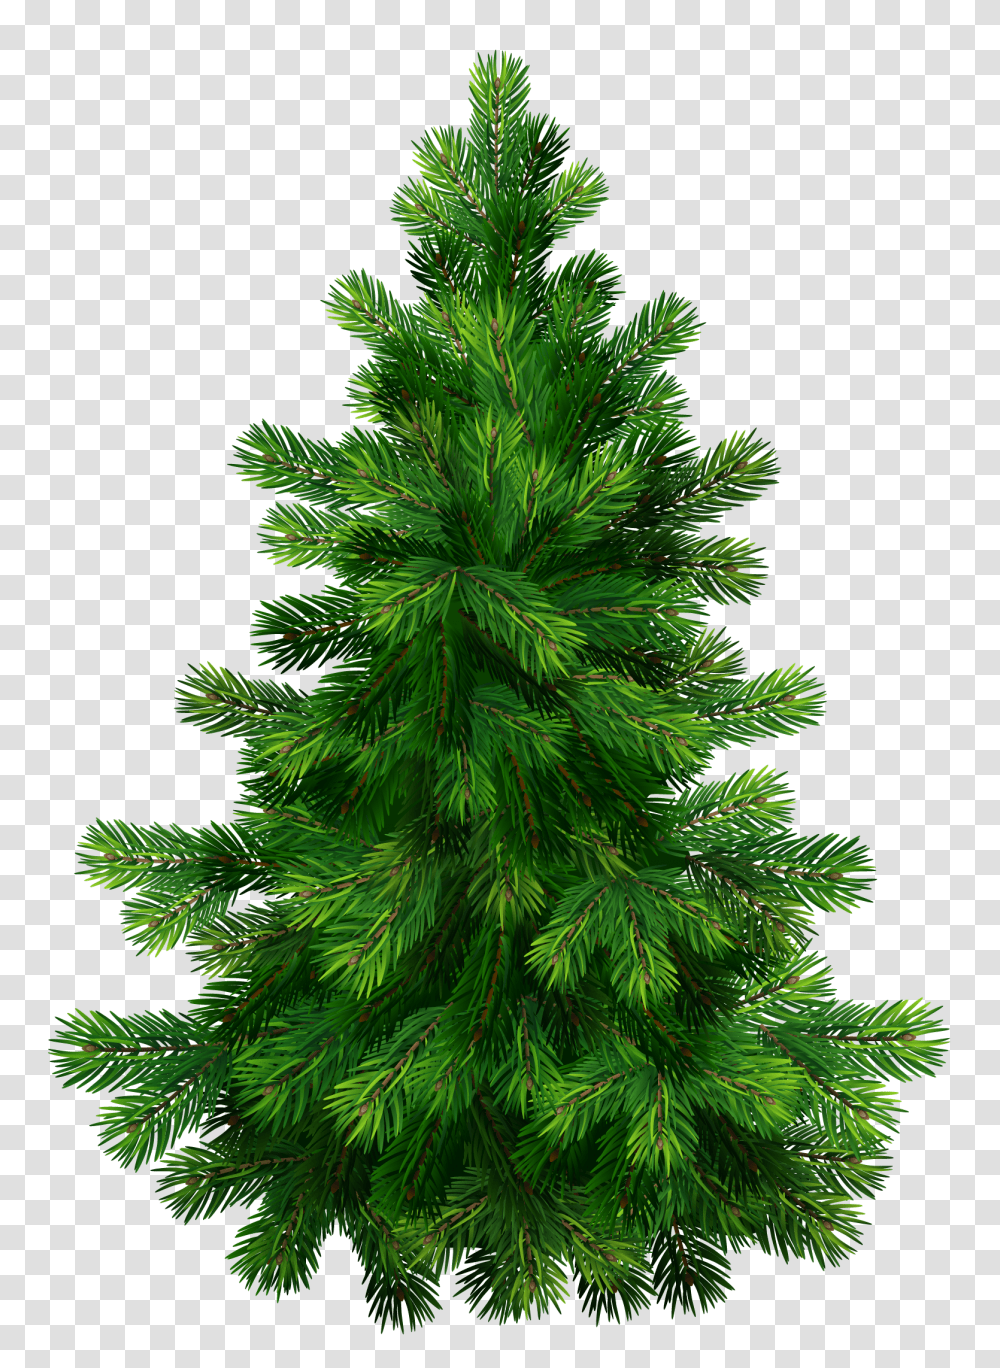 Fir Tree Image Purepng Free Cc0 Fir Tree, Christmas Tree, Ornament, Plant, Pine Transparent Png